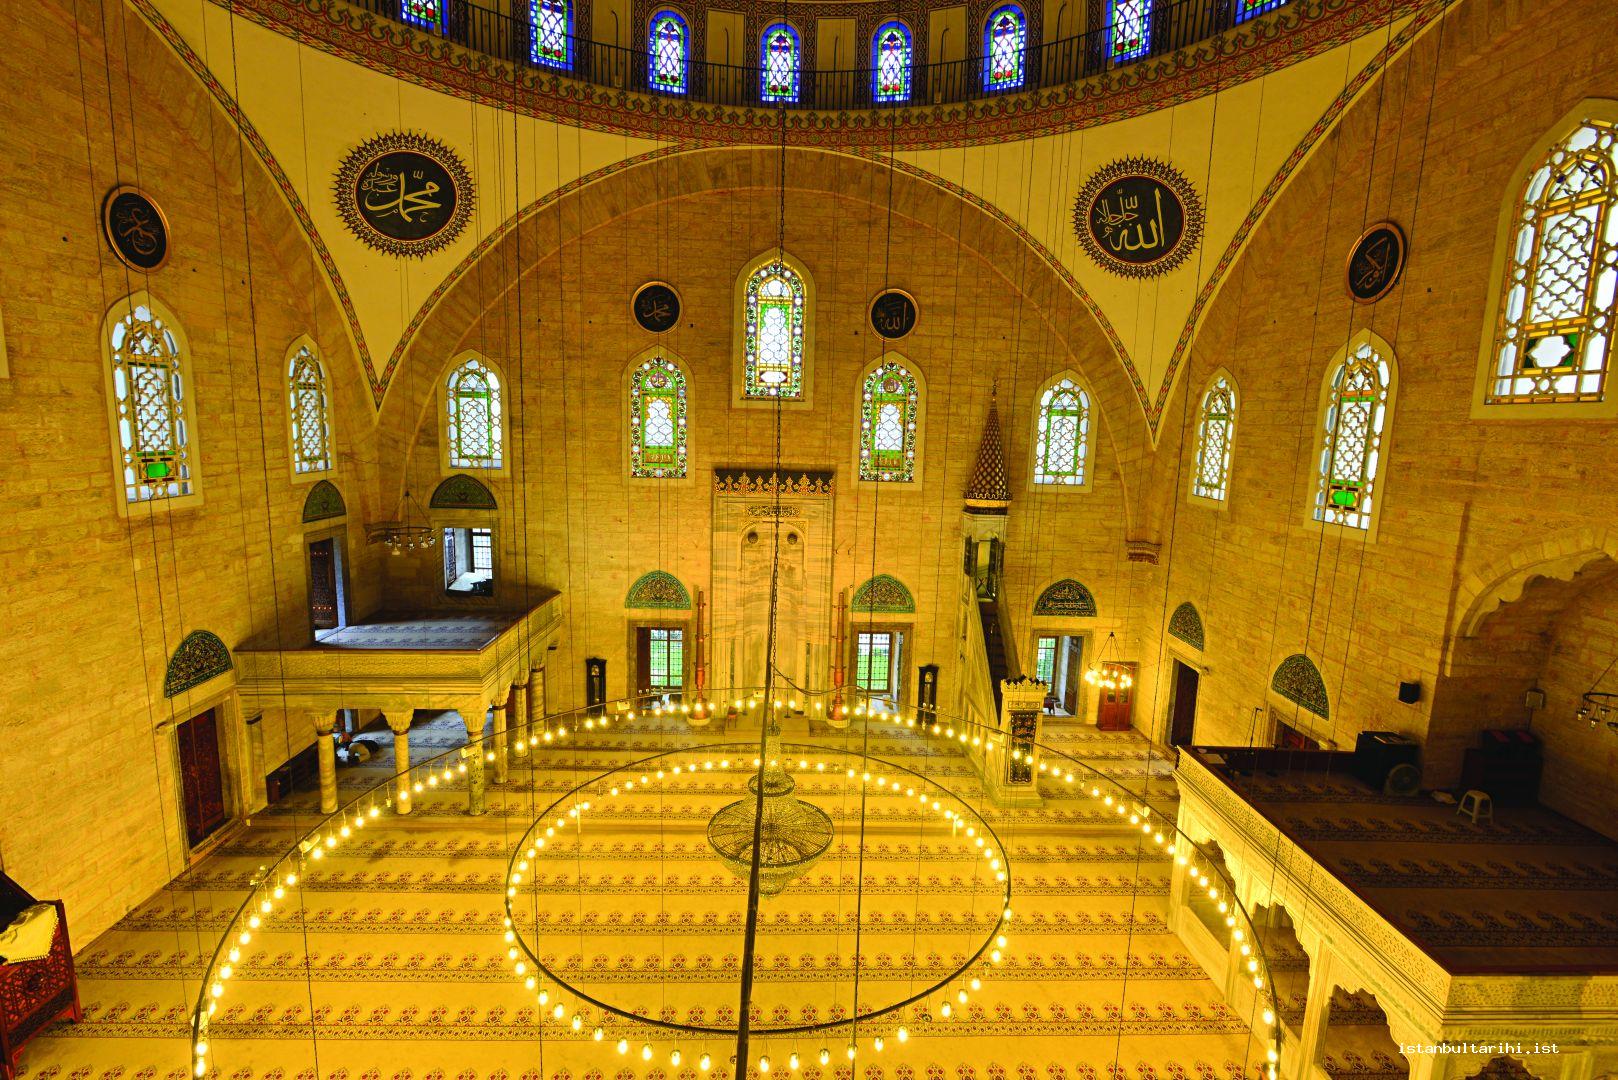 3- Yavuz Sultan Selim Mosque